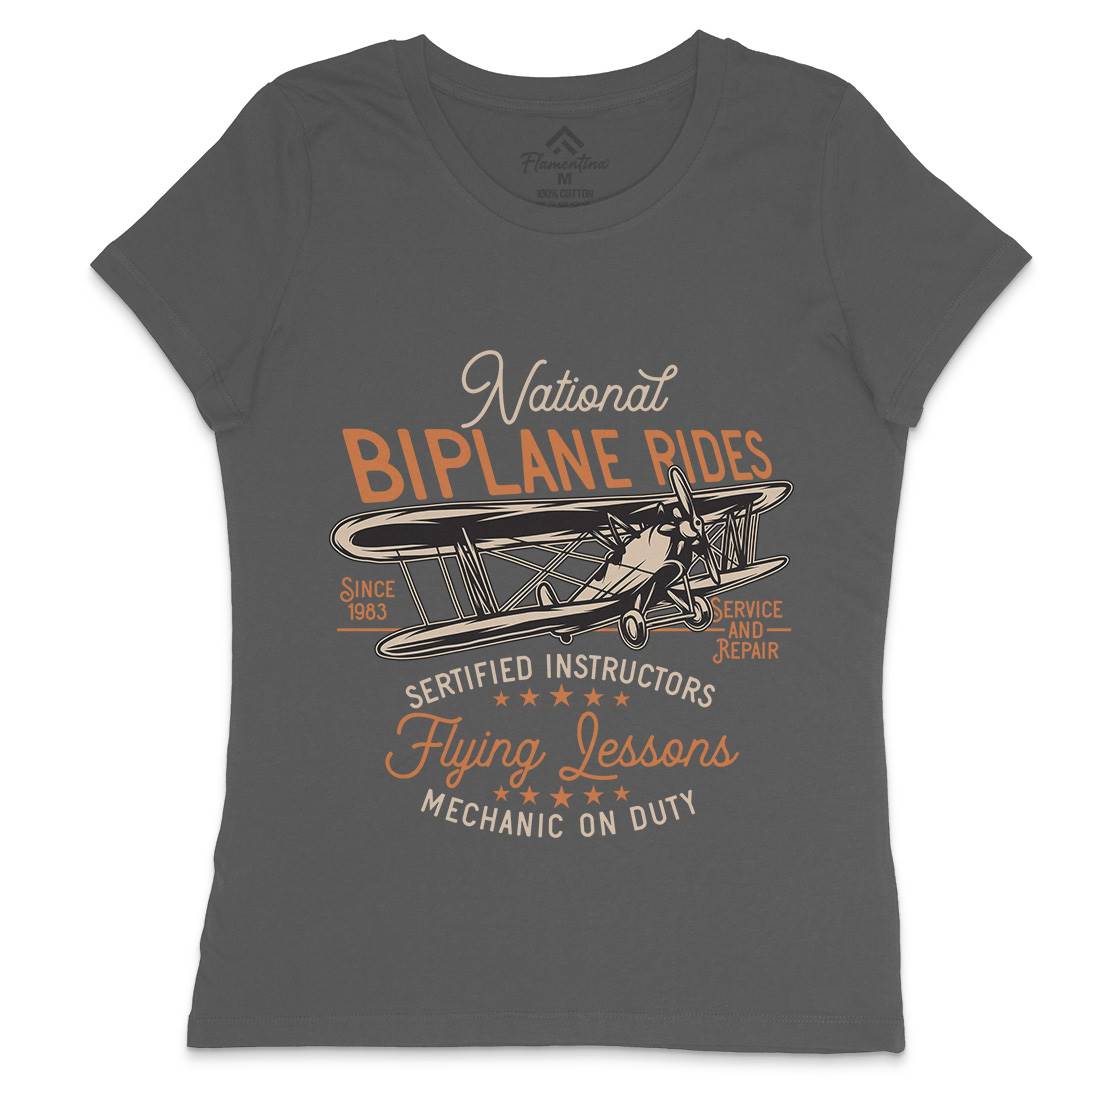 Biplane Rides Womens Crew Neck T-Shirt Vehicles D910